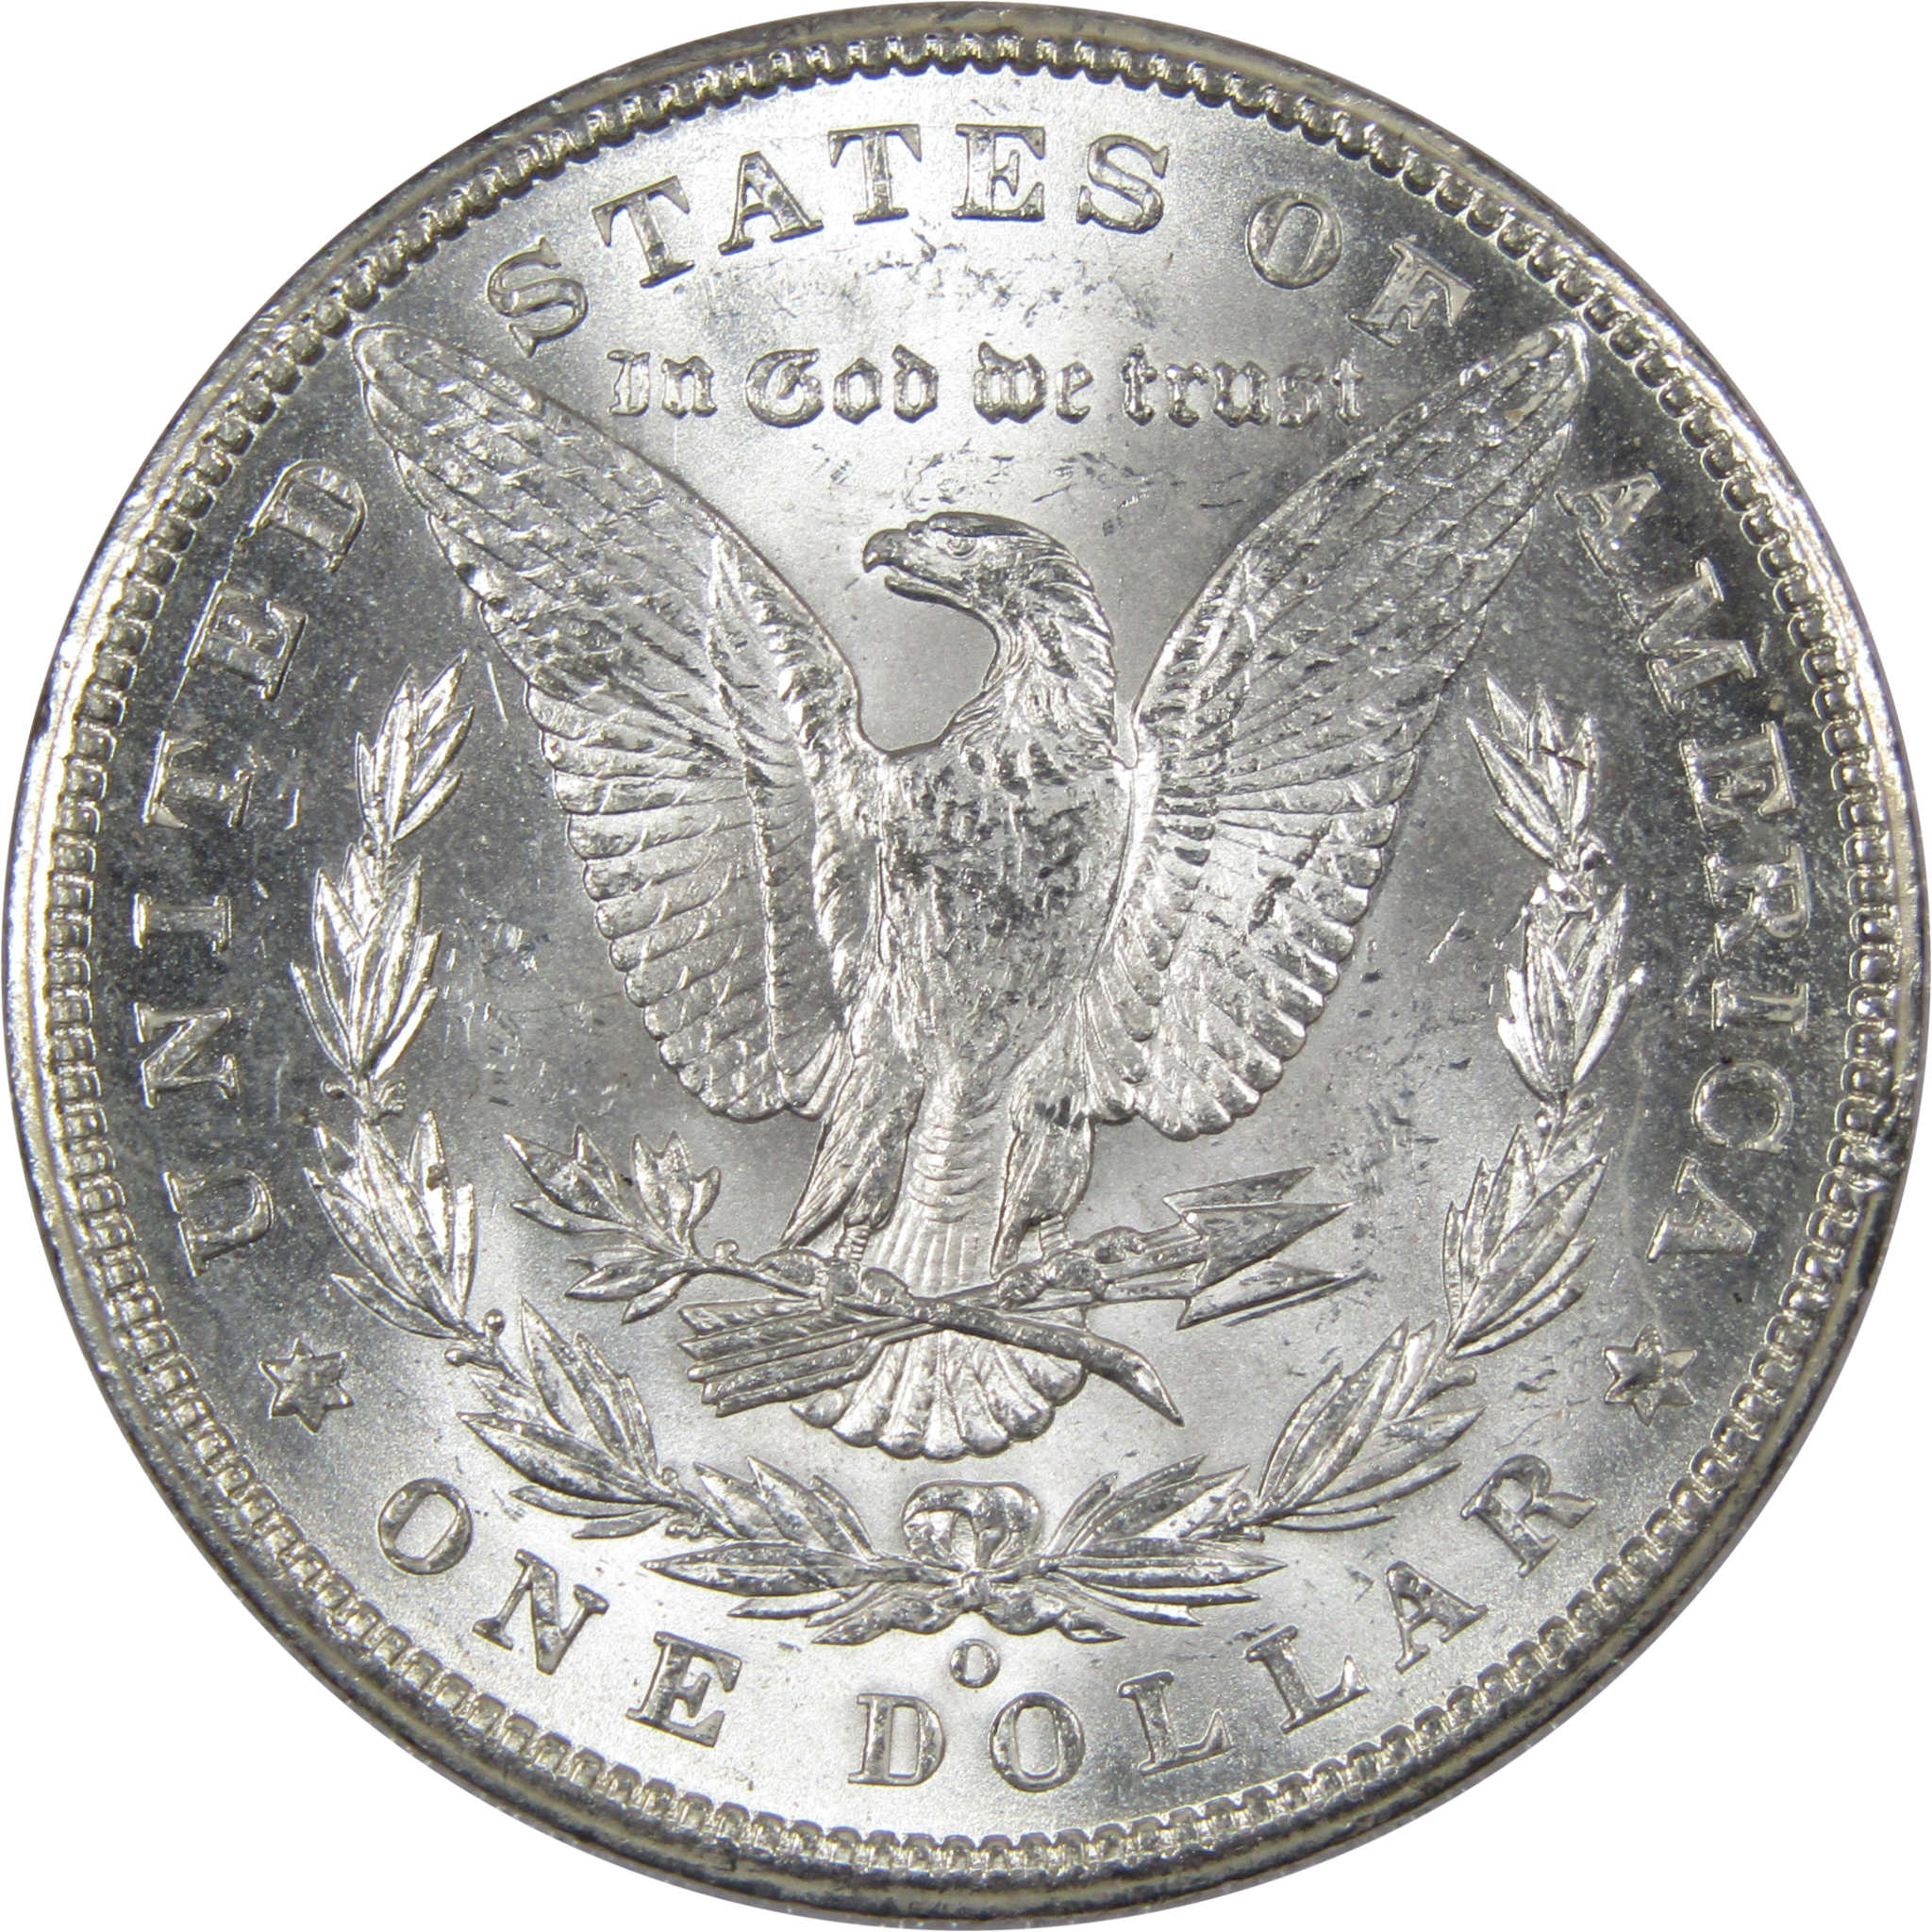 1900 O Morgan Dollar BU Uncirculated Mint State 90% Silver SKU:IPC9774 - Morgan coin - Morgan silver dollar - Morgan silver dollar for sale - Profile Coins &amp; Collectibles